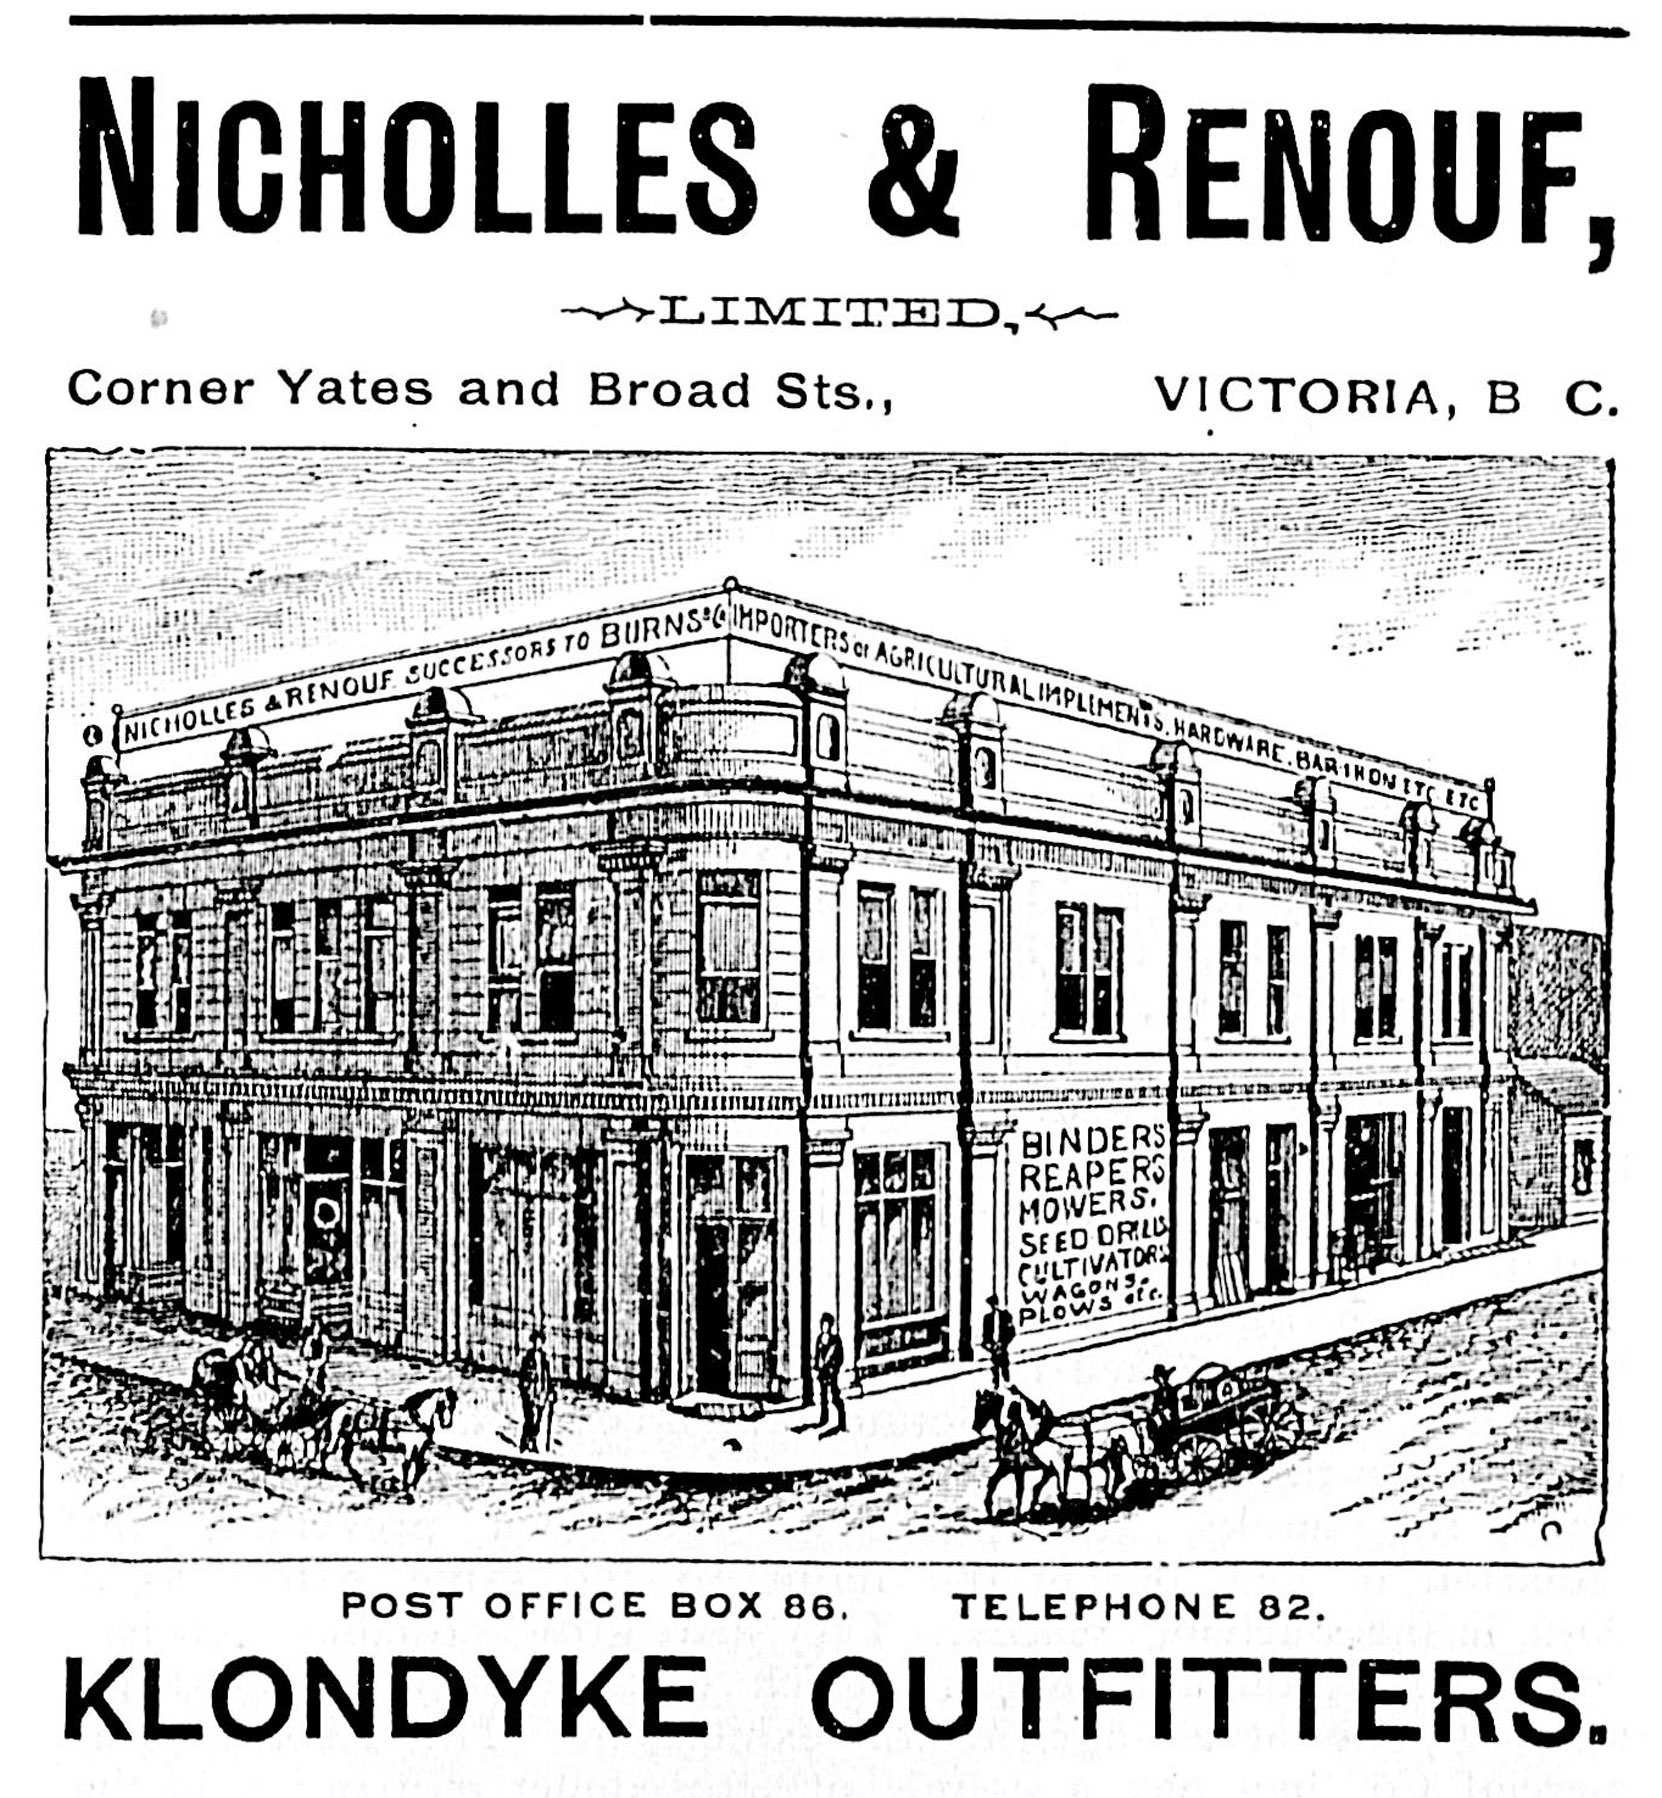 Advertisement for Nicholles & Renouf, Victoria, 1898.